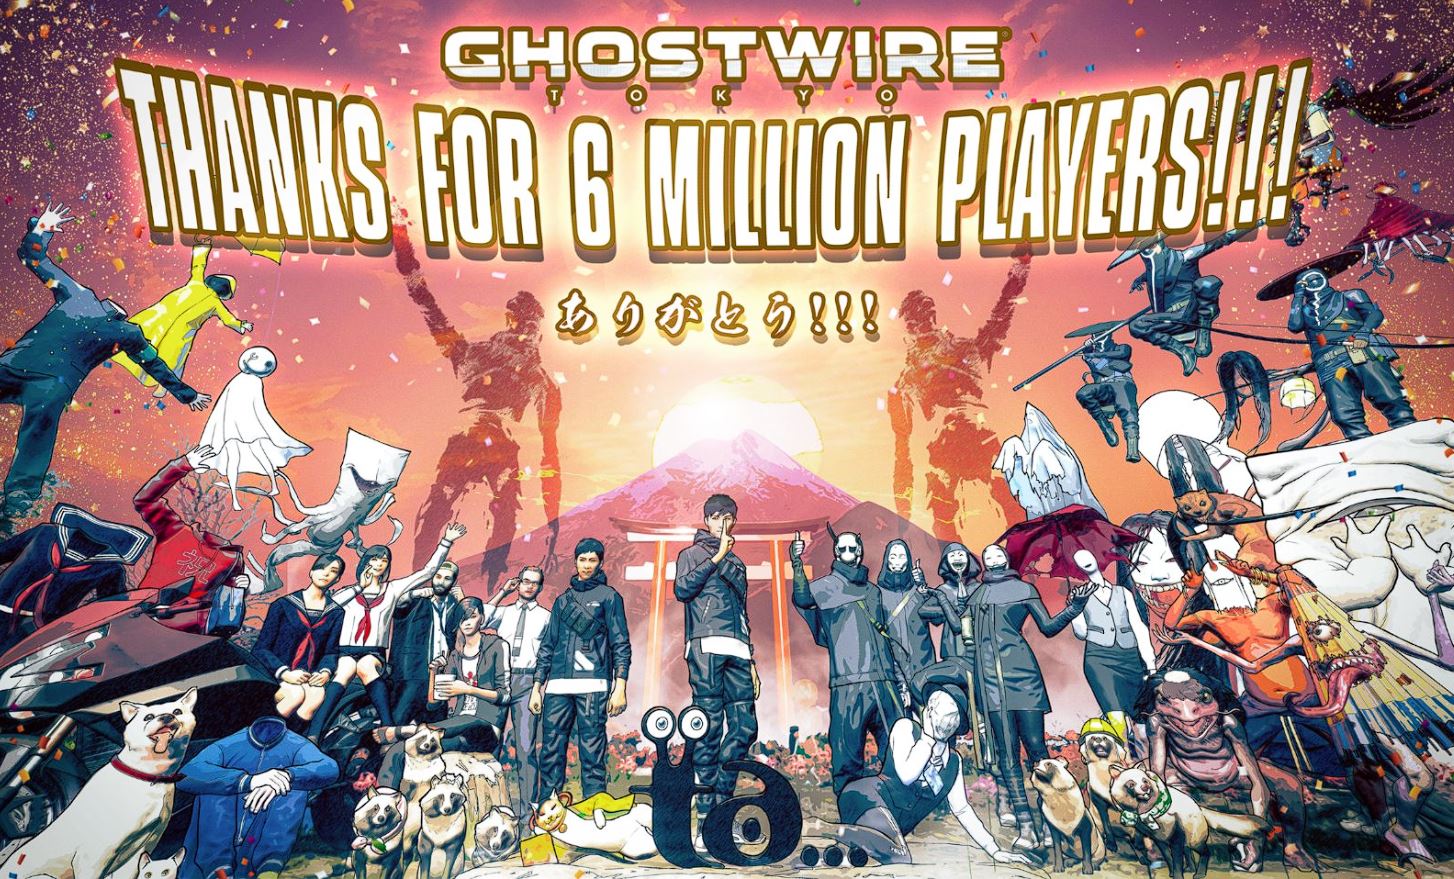 Ghostwire: Tokyo's development team thanks their 6 million players.